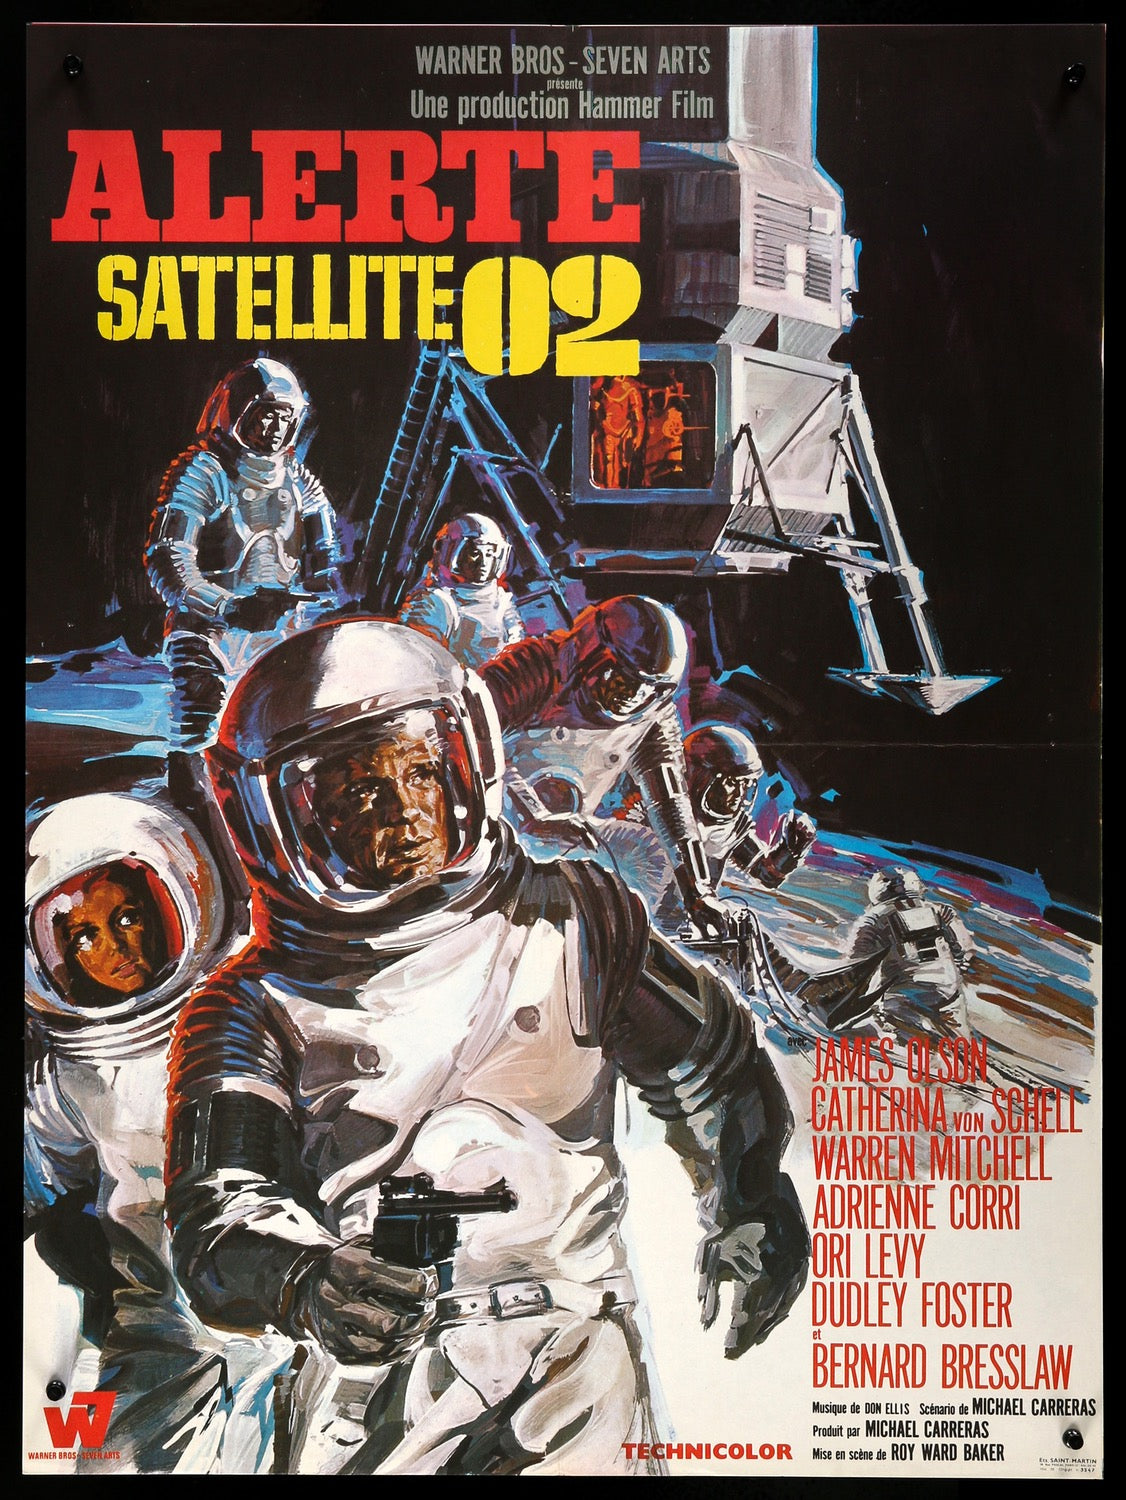 Moon Zero Two (1969) original movie poster for sale at Original Film Art